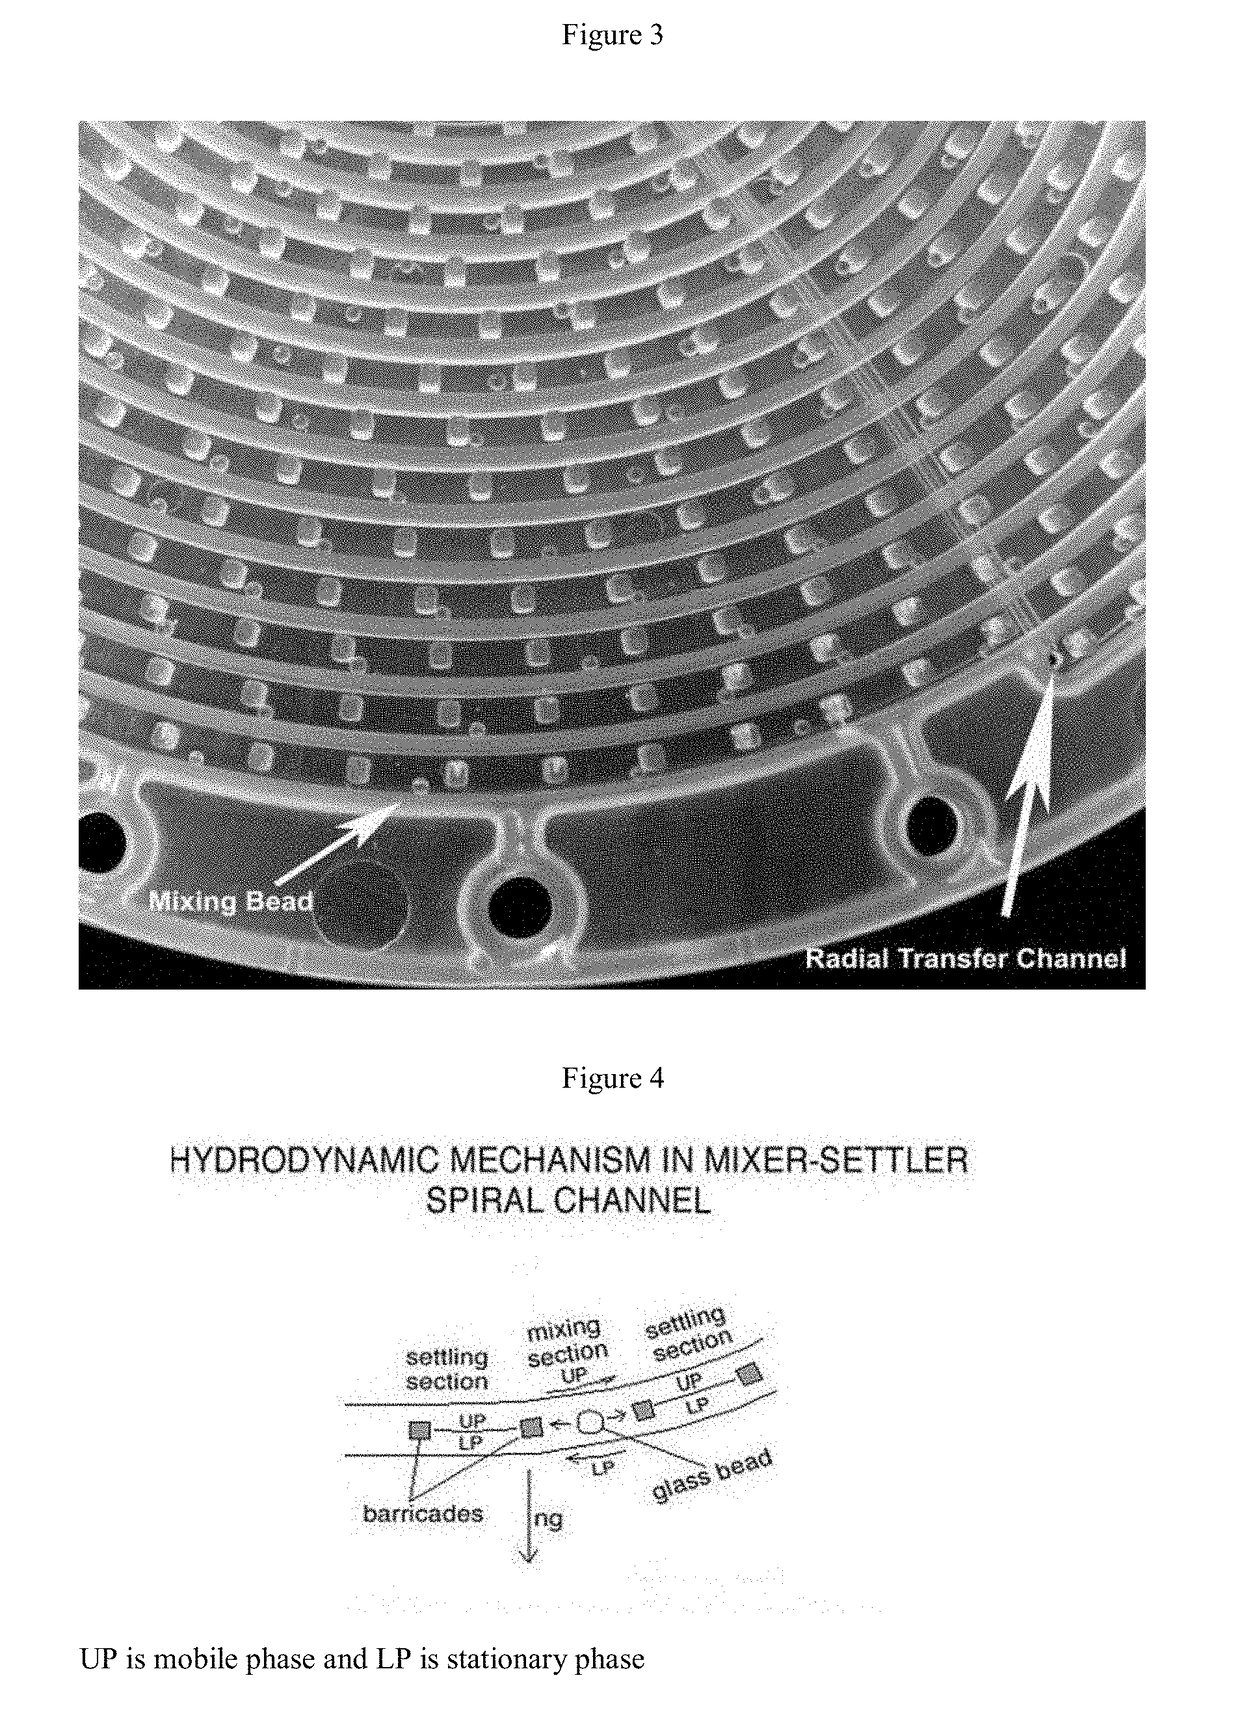 Planetary Countercurrent Chromatography Centrifuge and Mixer-Settler Rotor